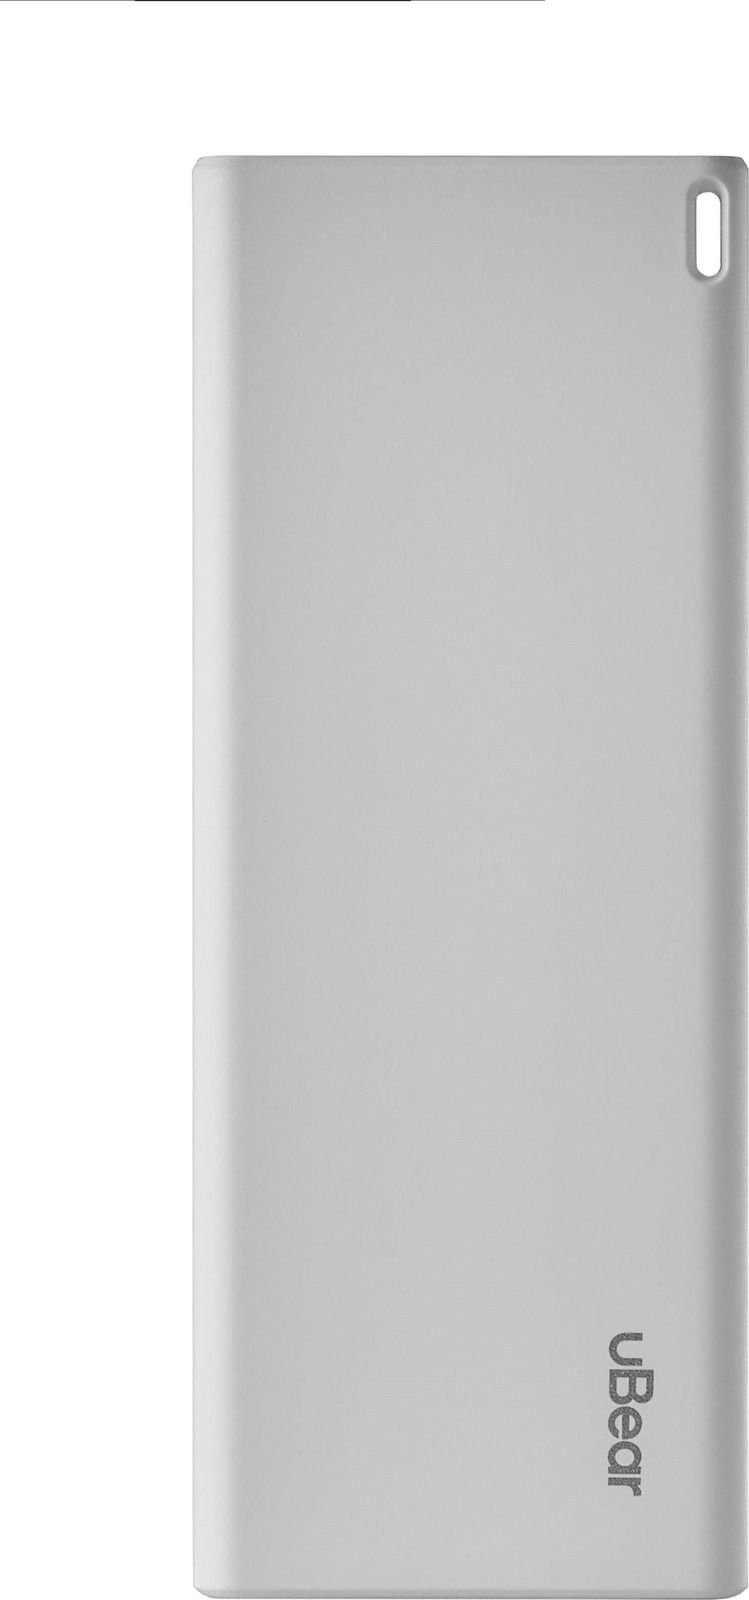 Внешний аккумулятор uBear Core Power Bank 6000 мАч, белый